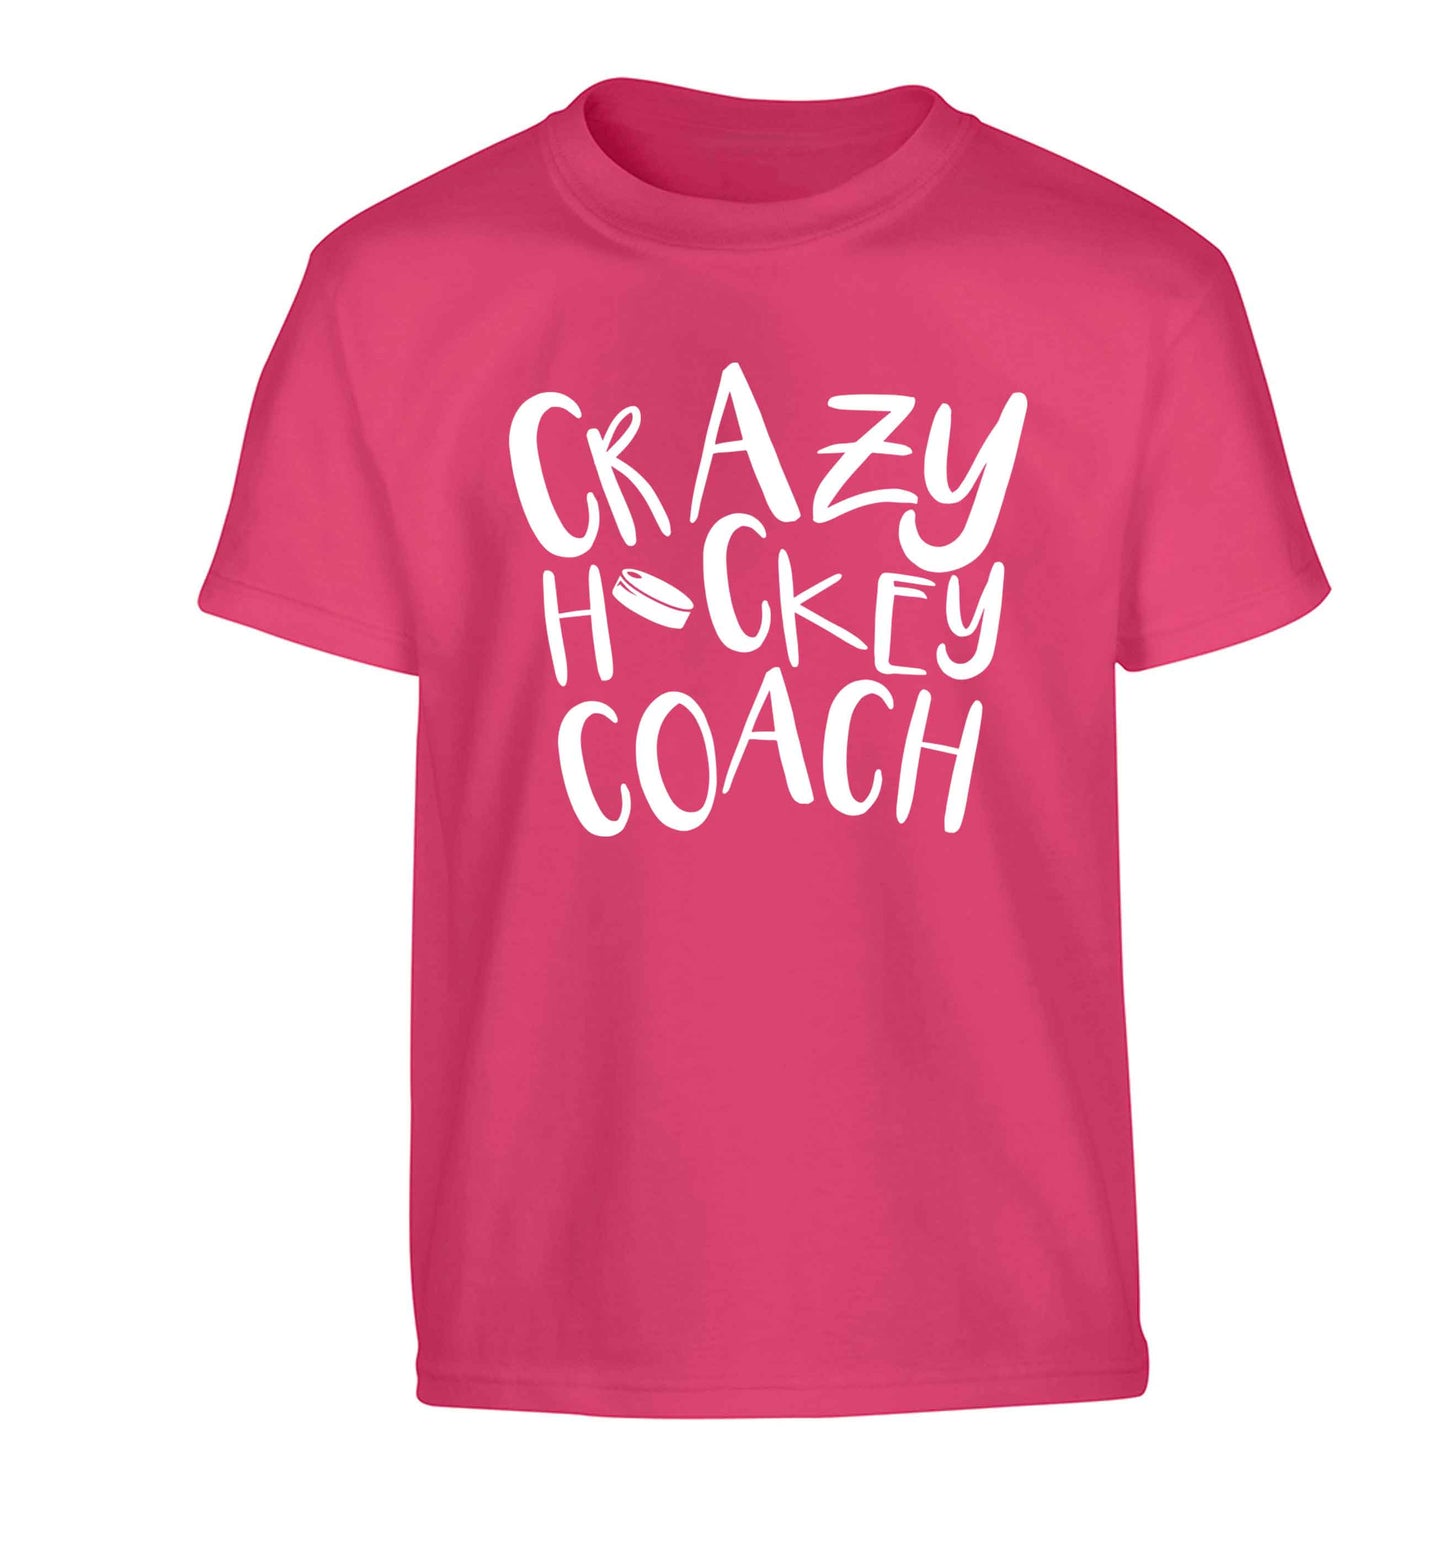 Crazy hockey coach Children's pink Tshirt 12-13 Years